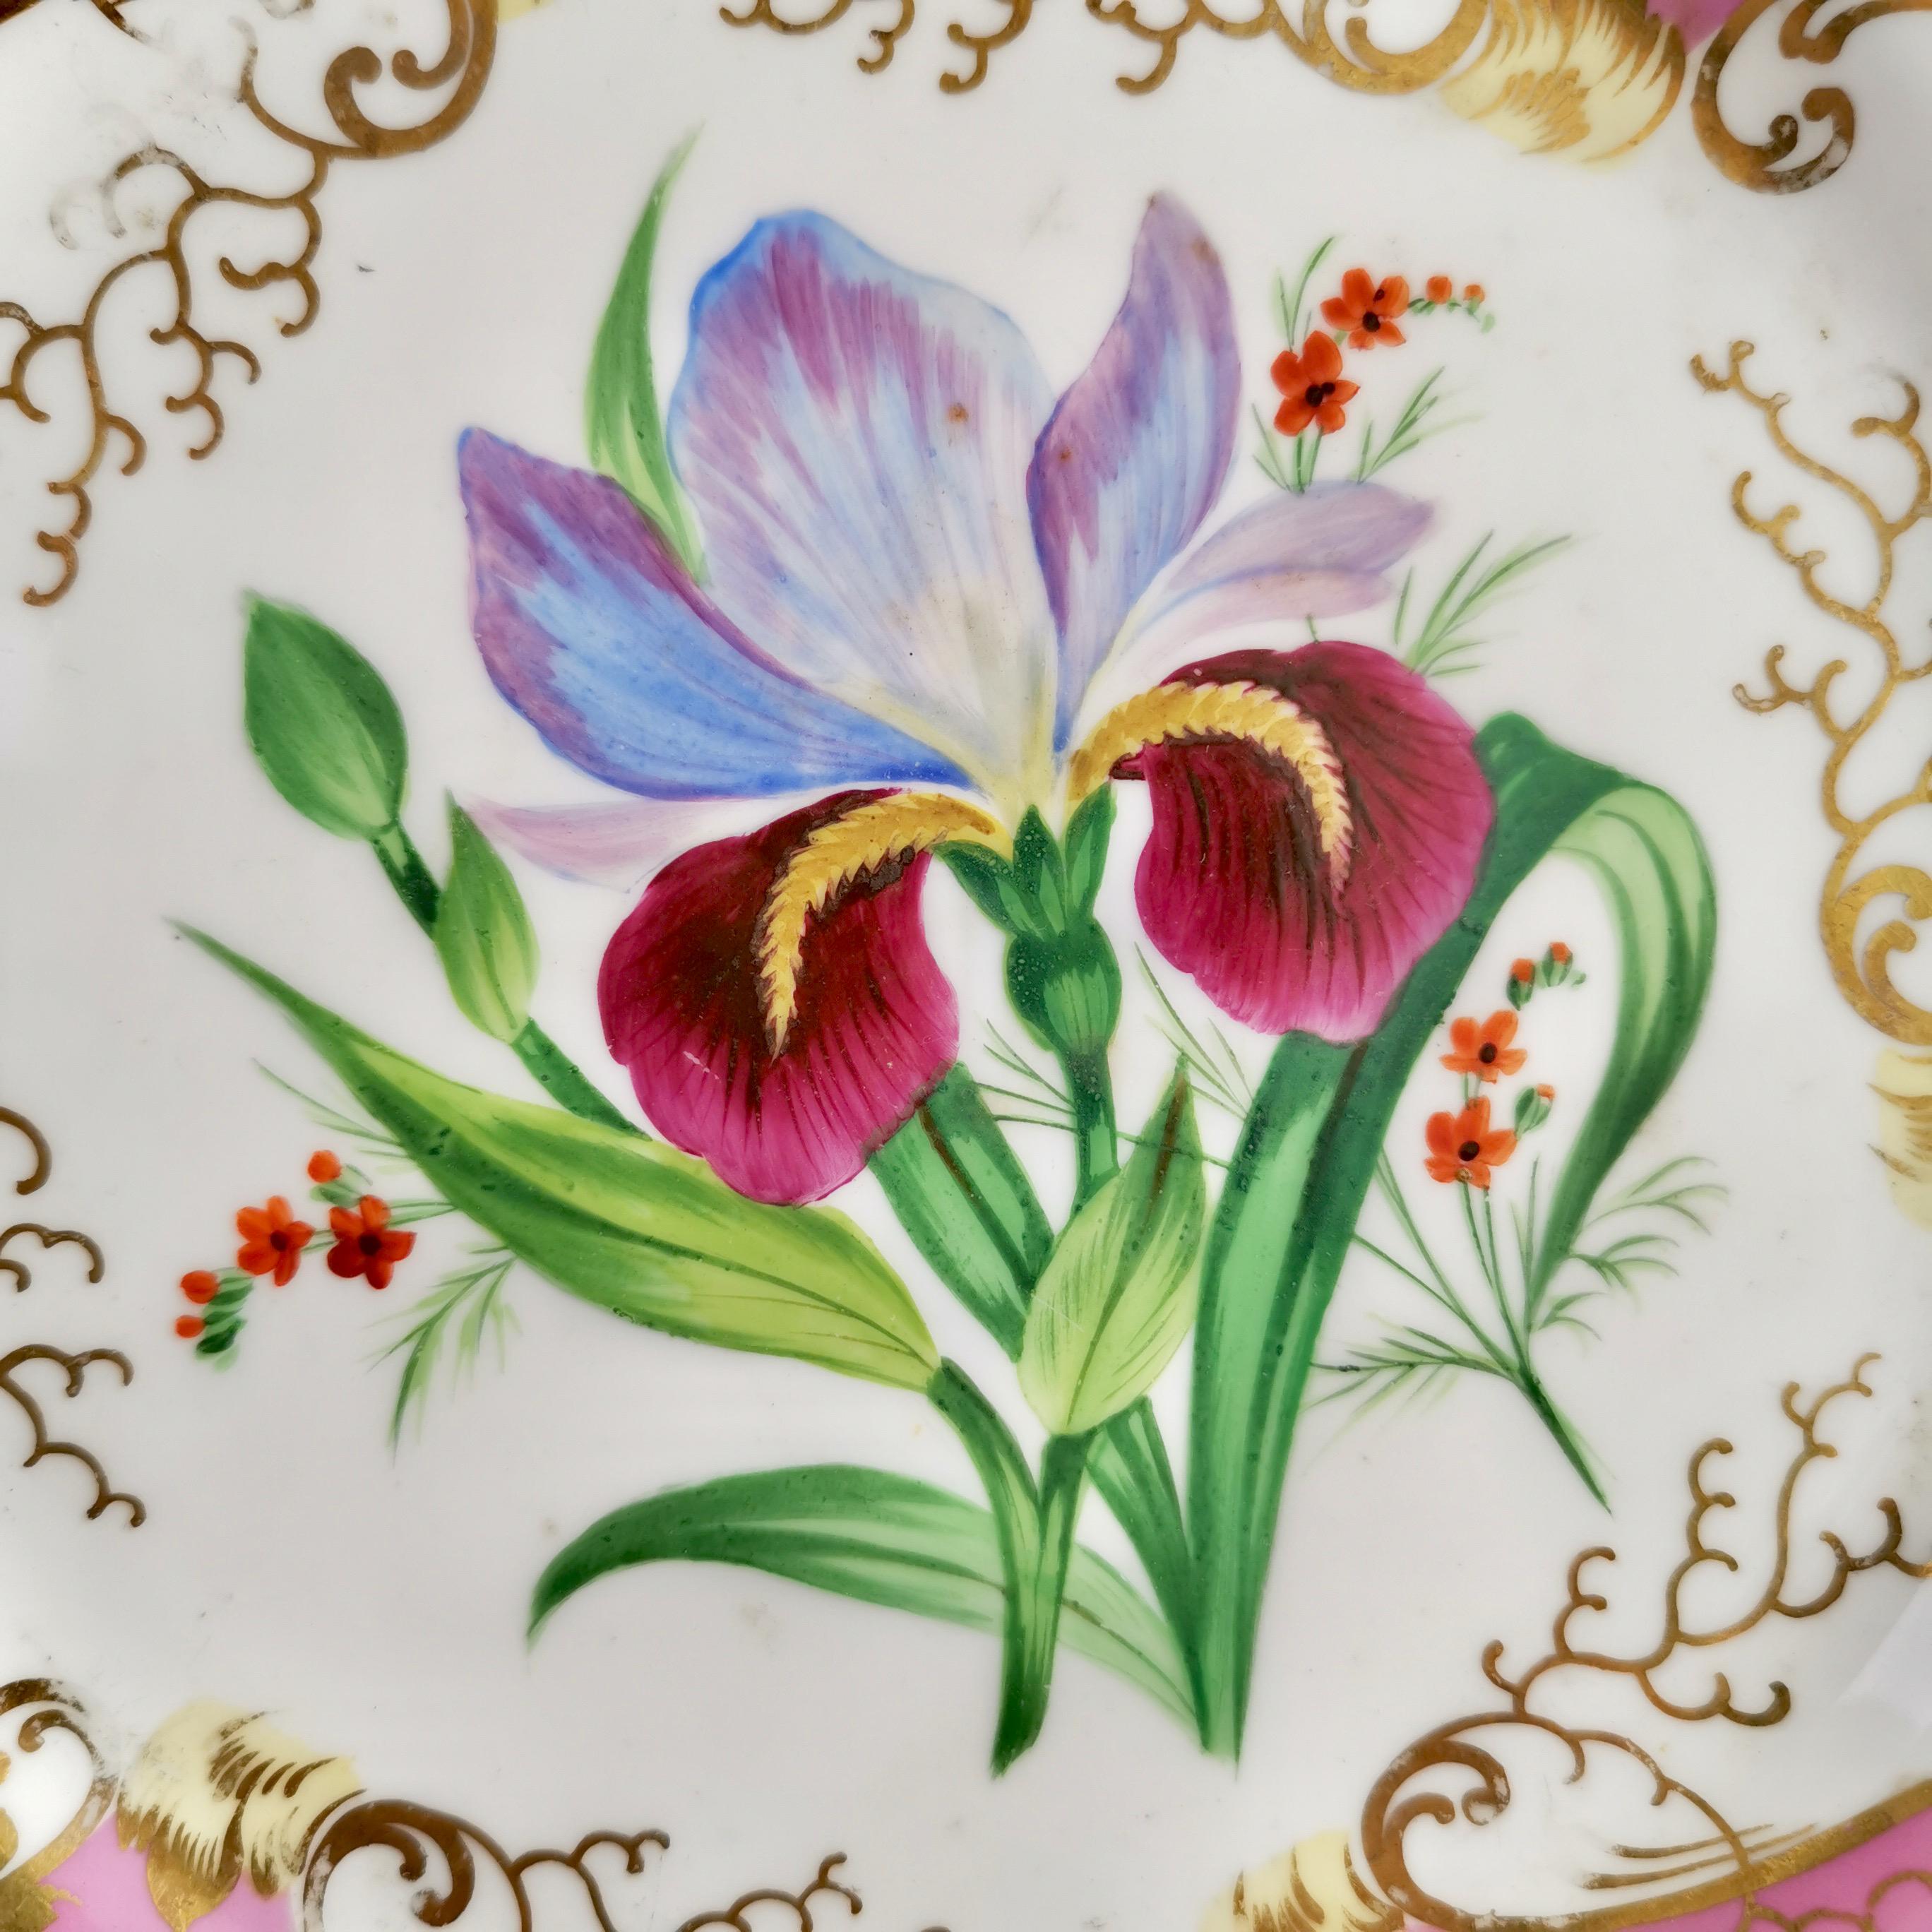 Samuel Alcock Small Porcelain Dessert Set, Pink with Flowers, Victorian 1854 2